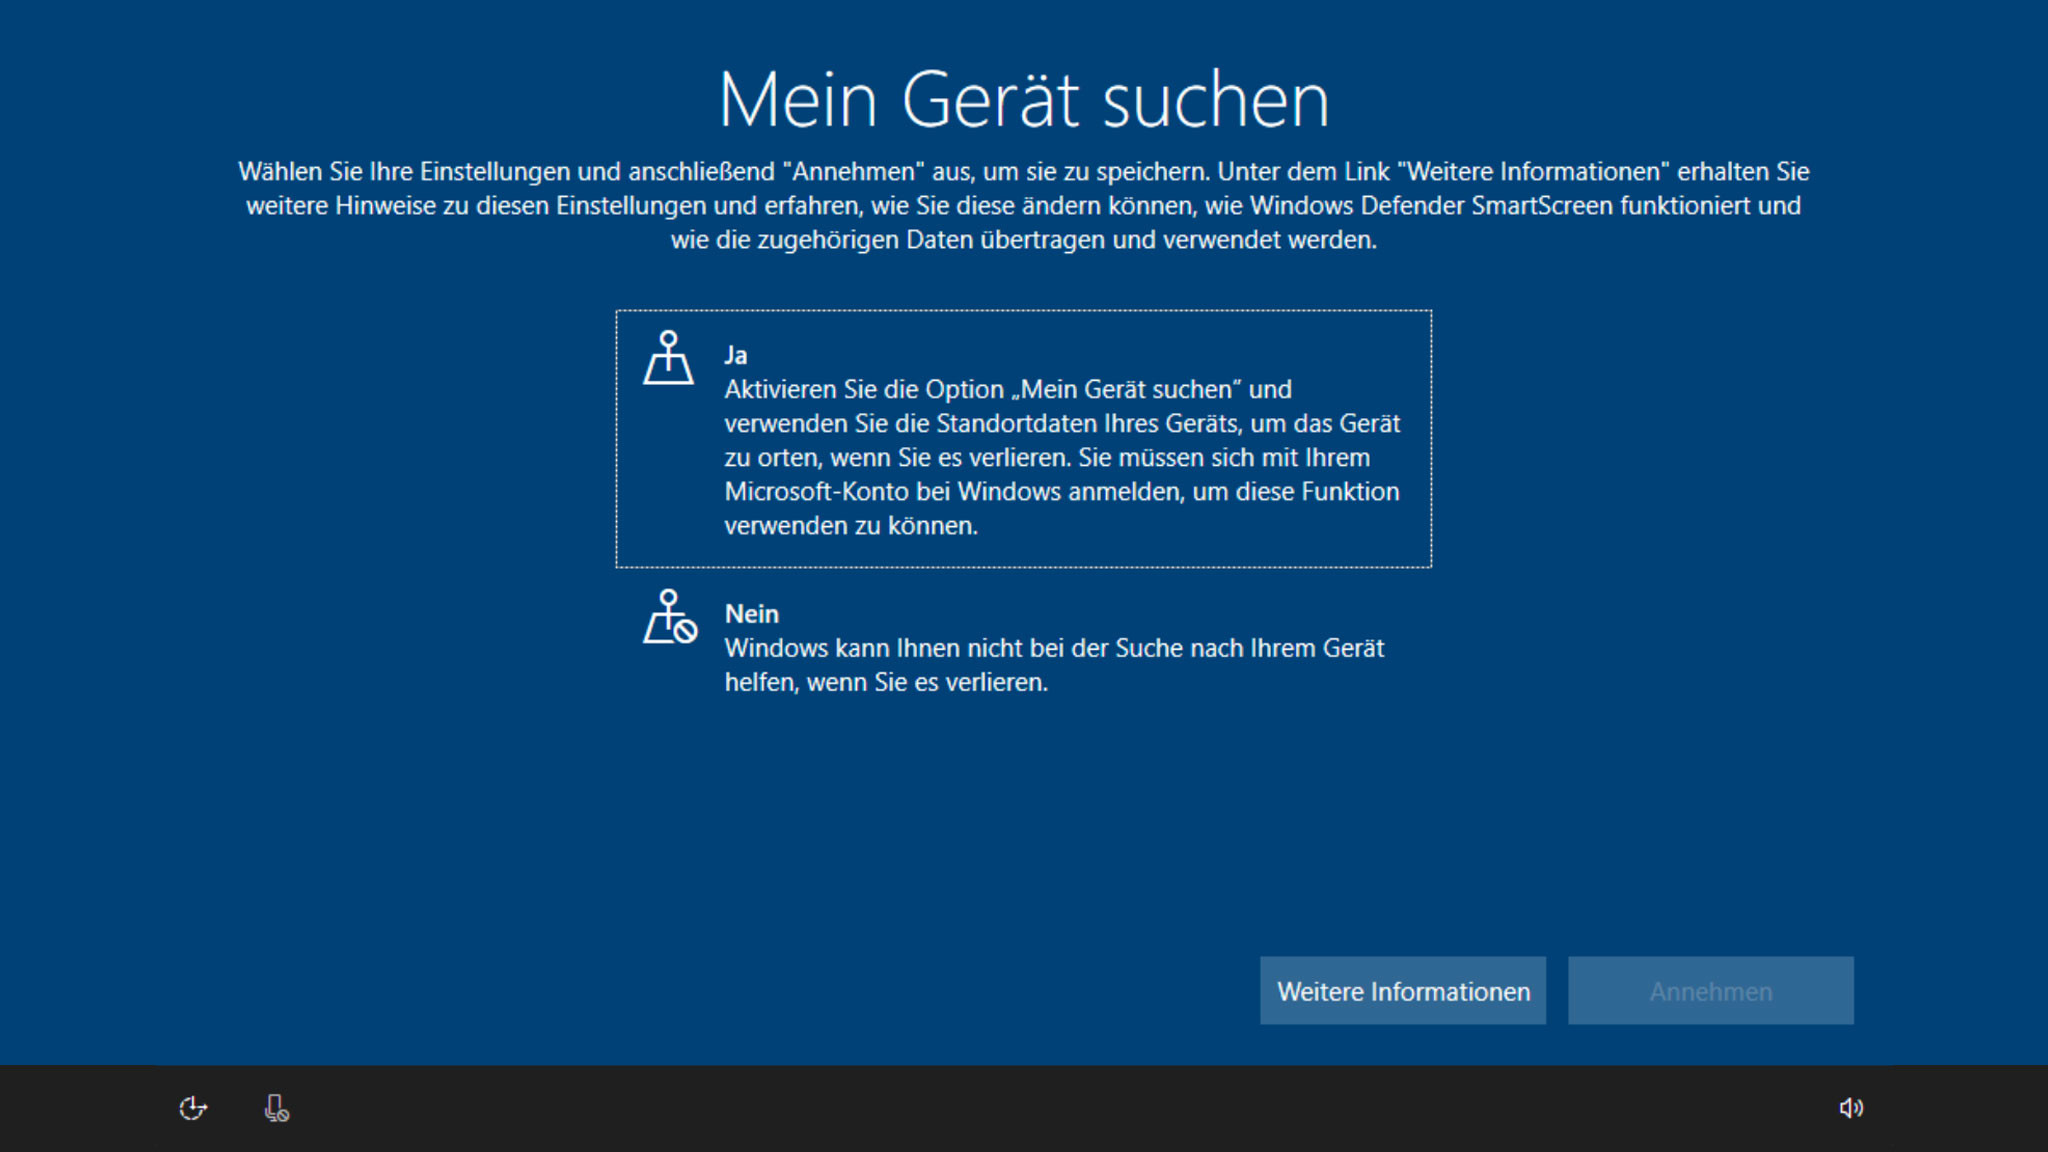 Windows-10-Geraet-suchen-2048x1152-9918e094ed5ef1d1.jpg